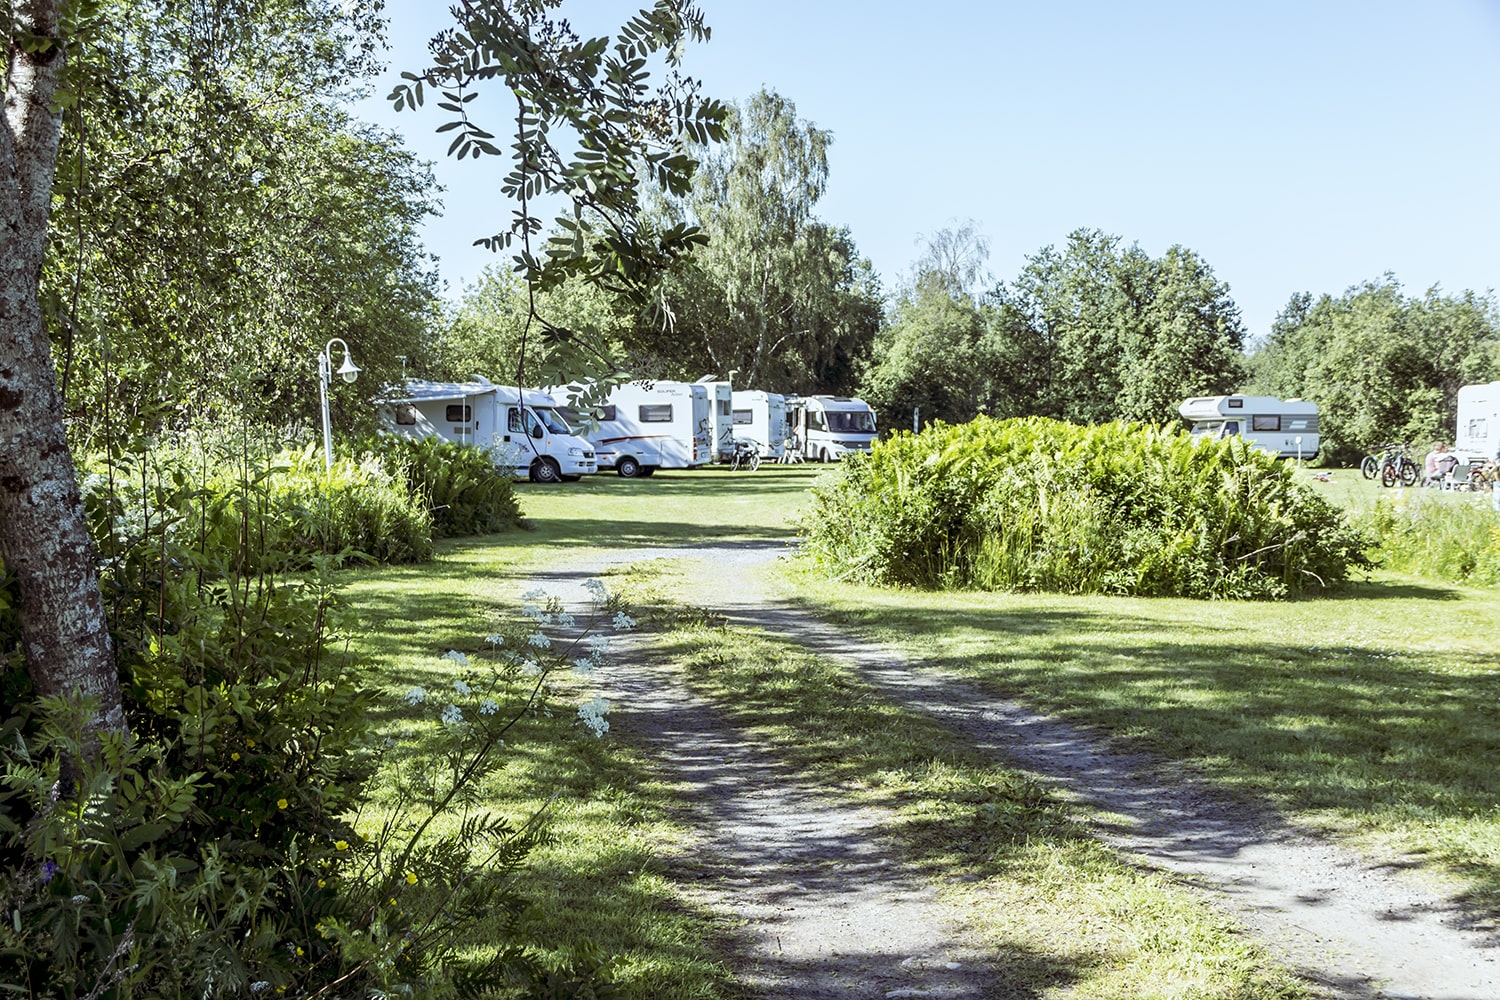 kielosaari-riverside-cottages-and-camping